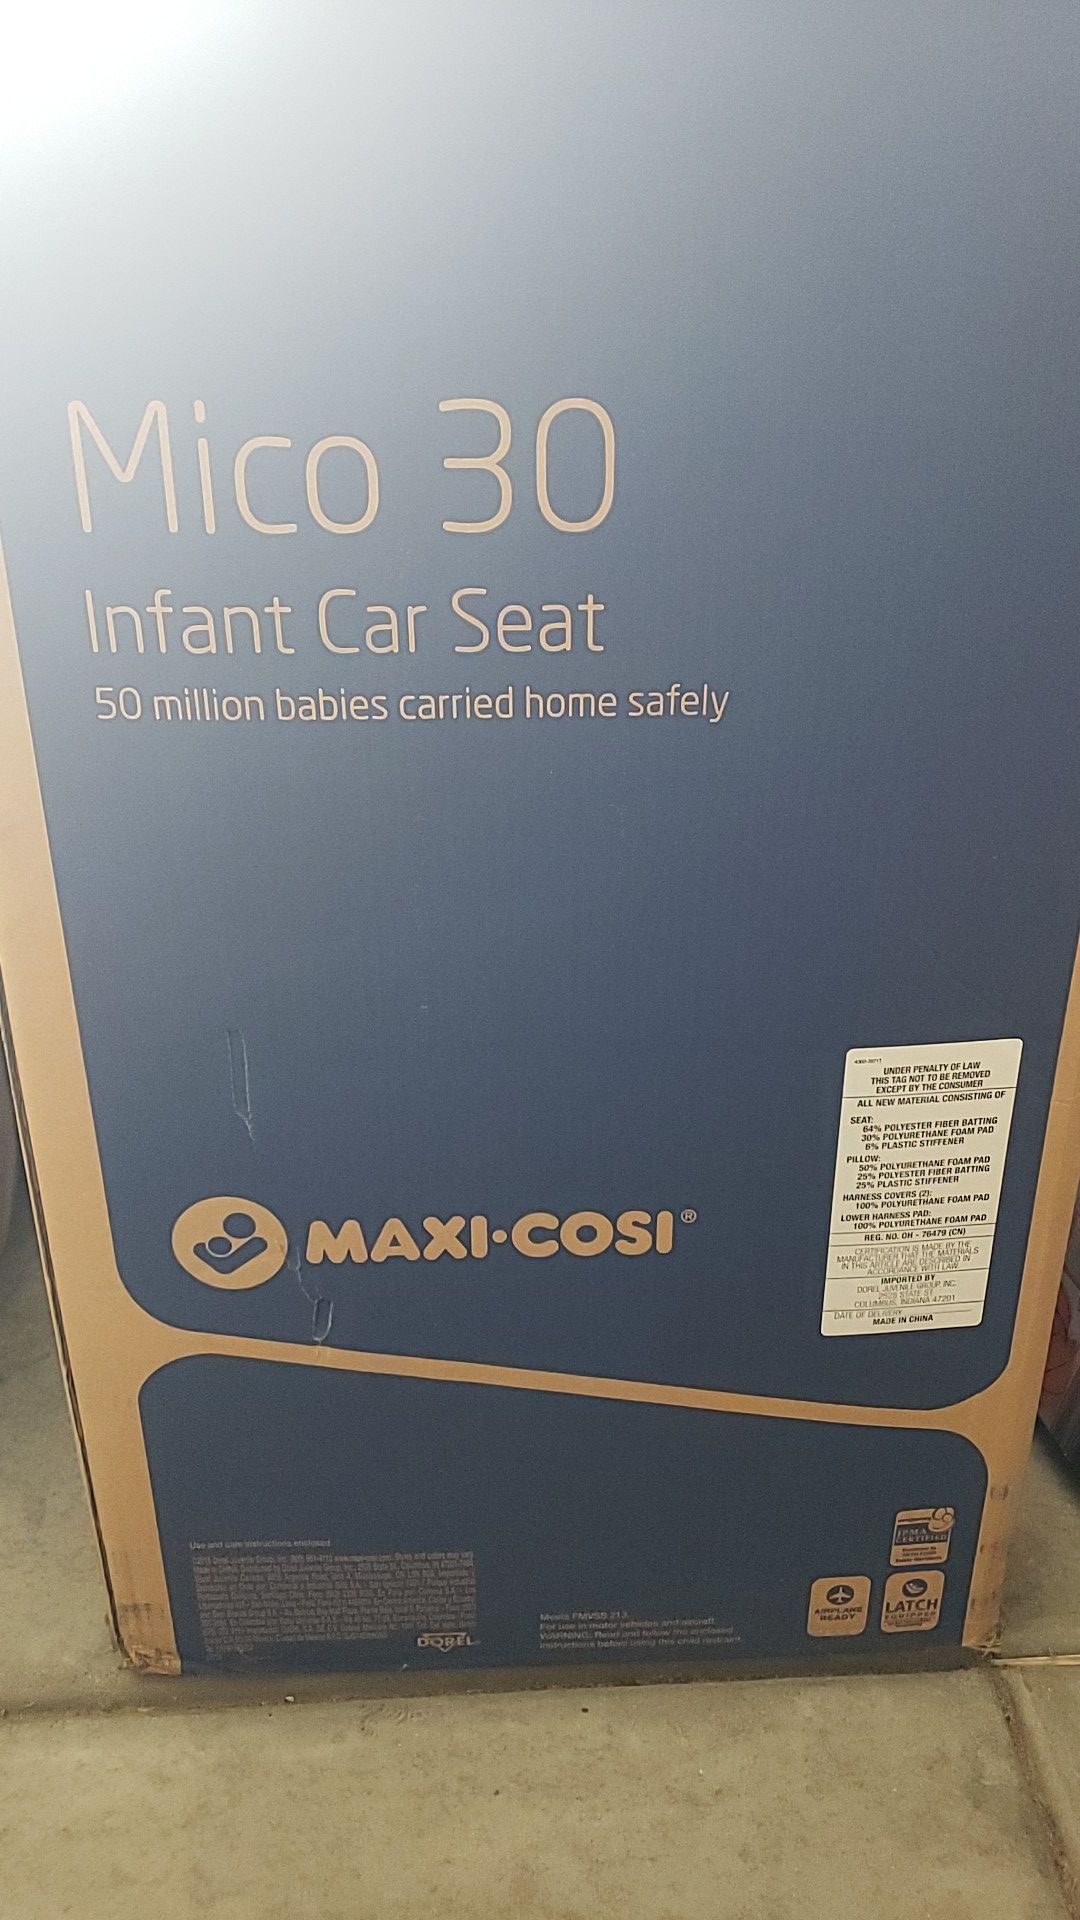 Mico 30 infant car seat